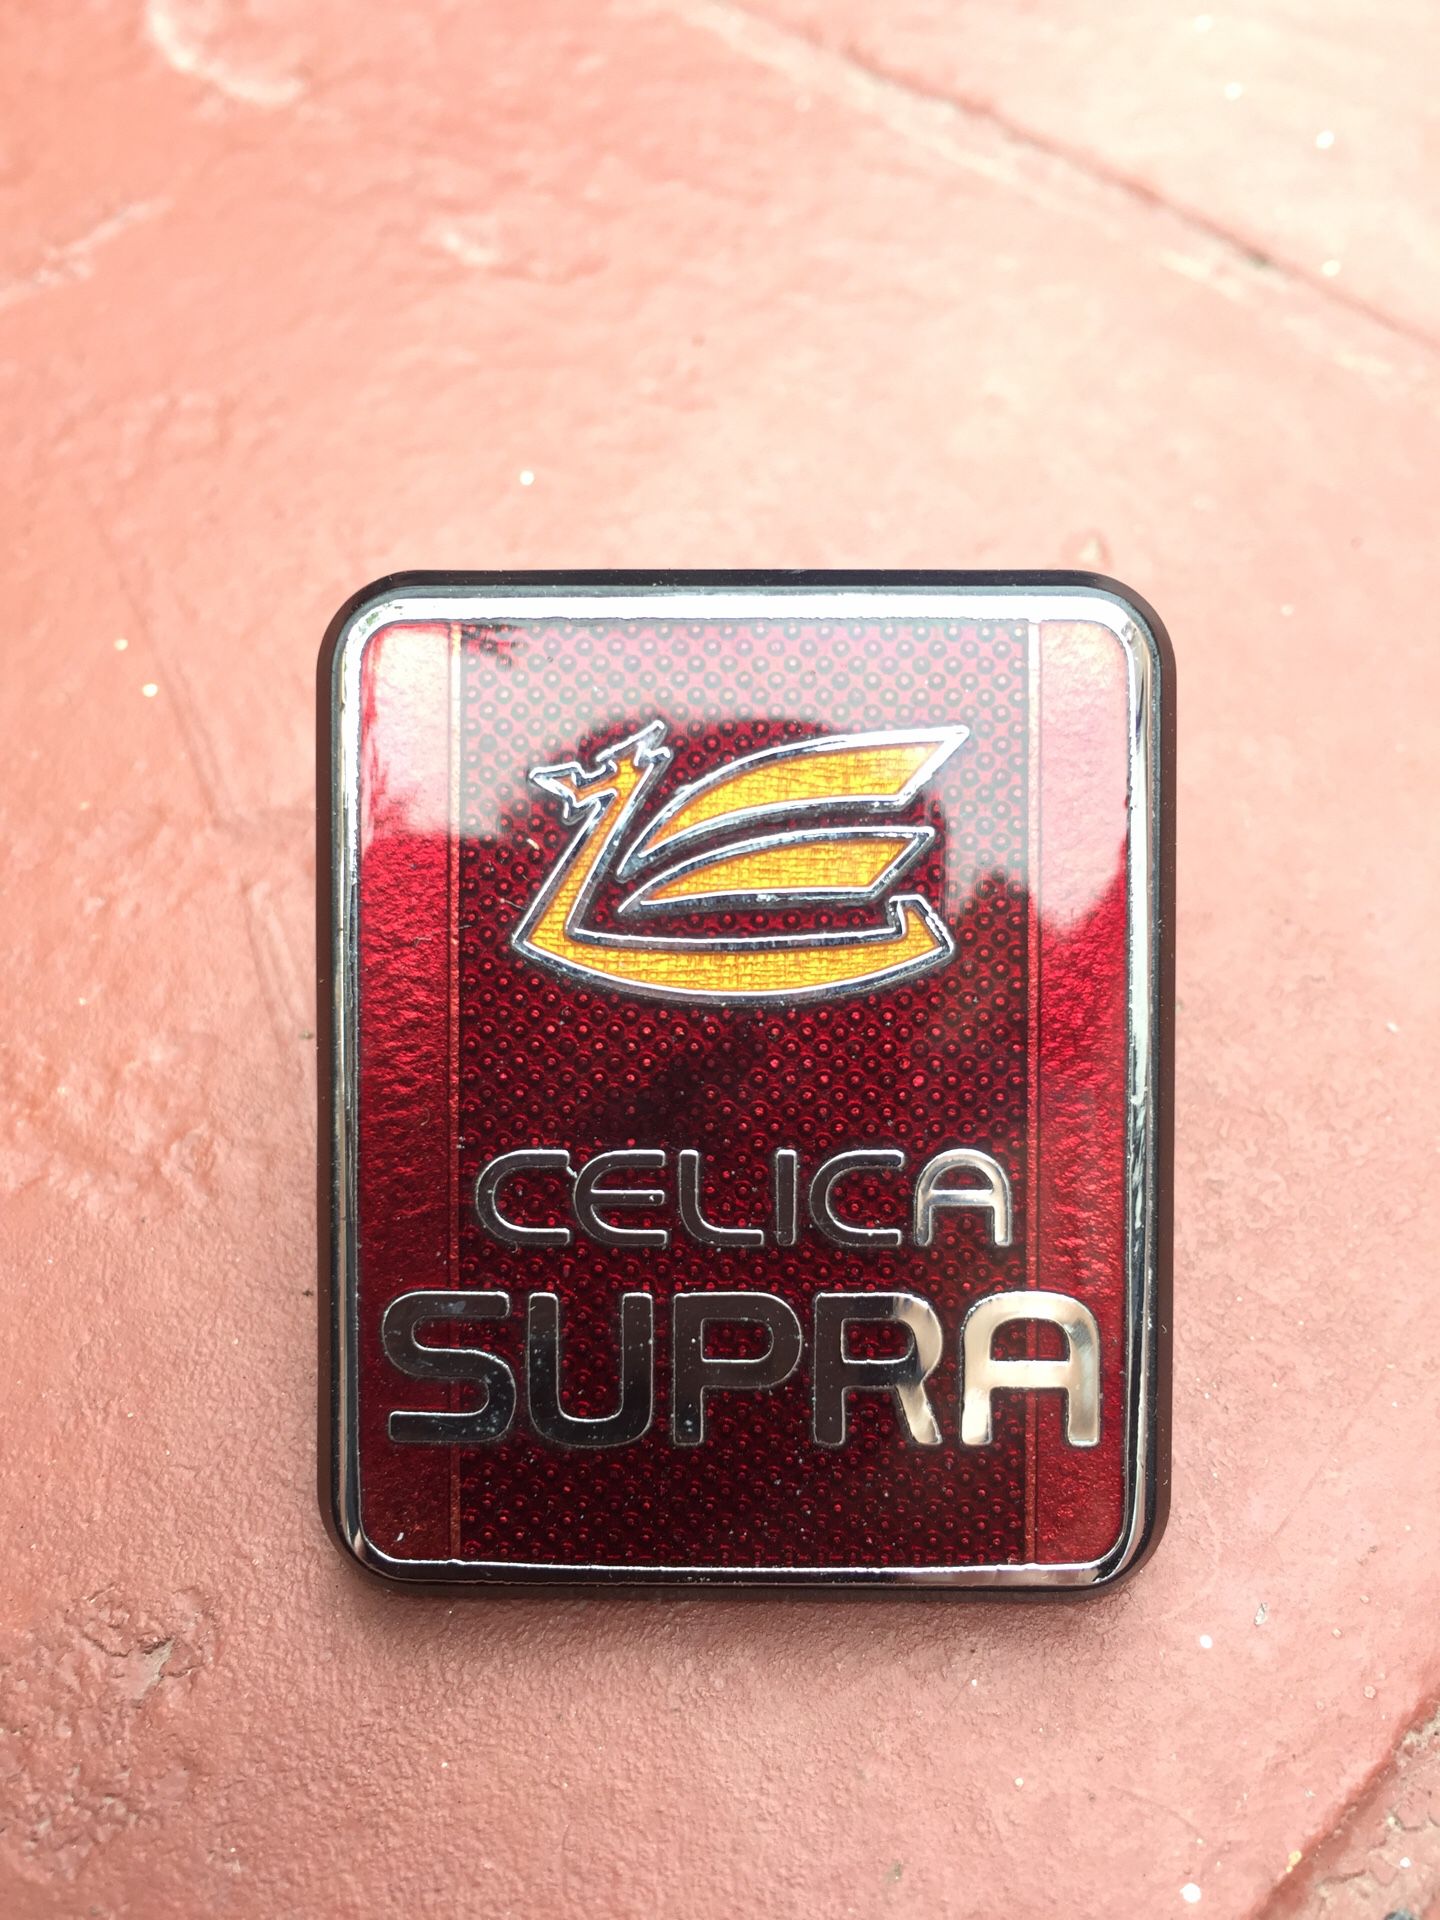 82-85 Toyota Celica Supra Nose Badge